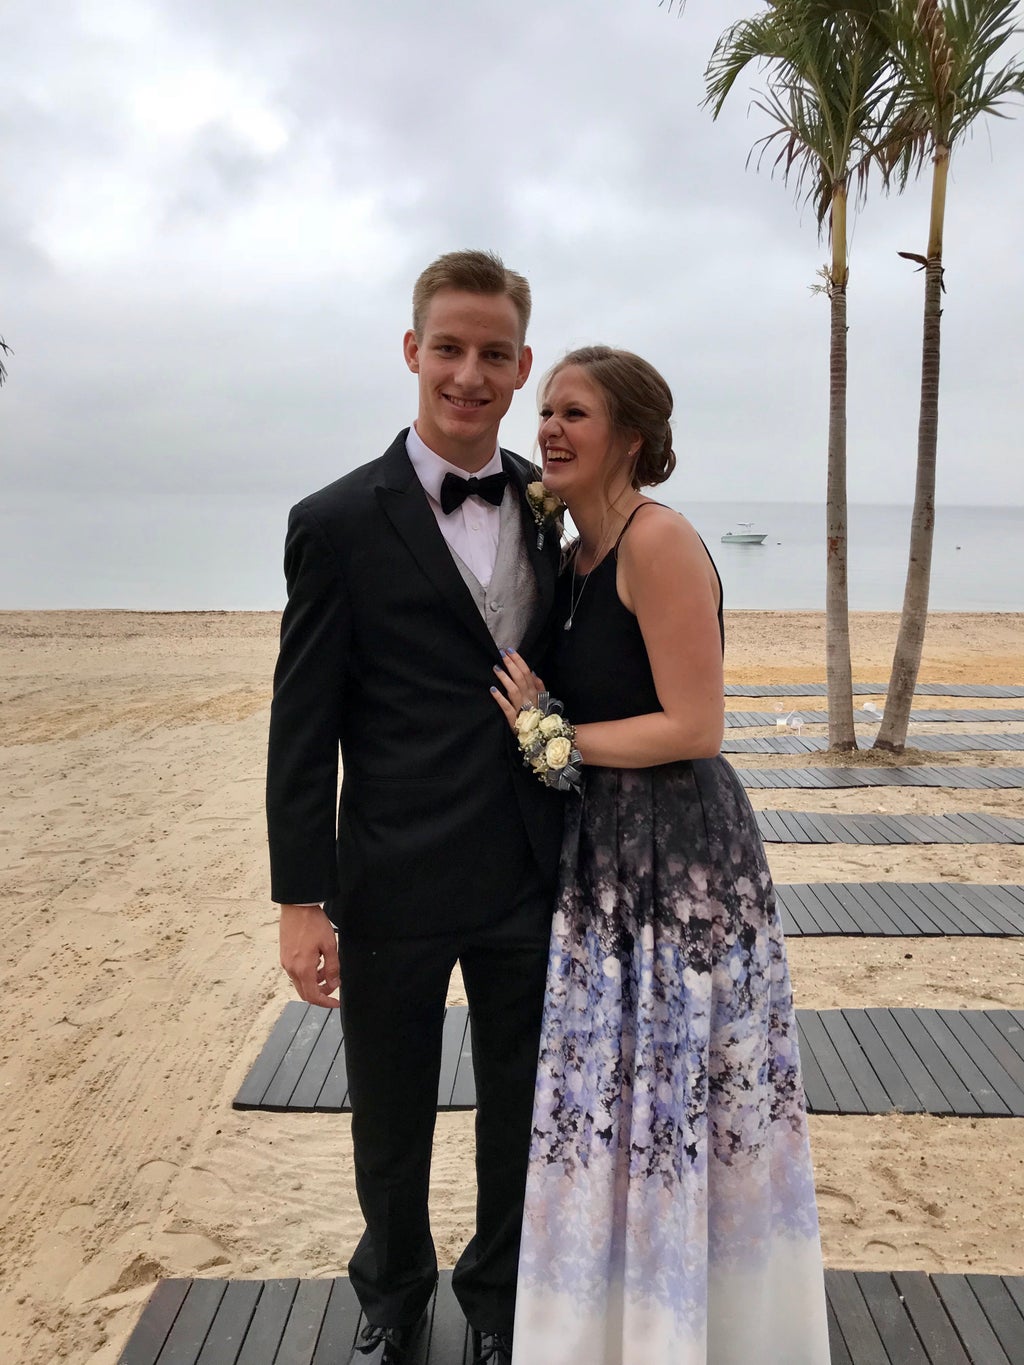 My boyfriend and I at his senior prom